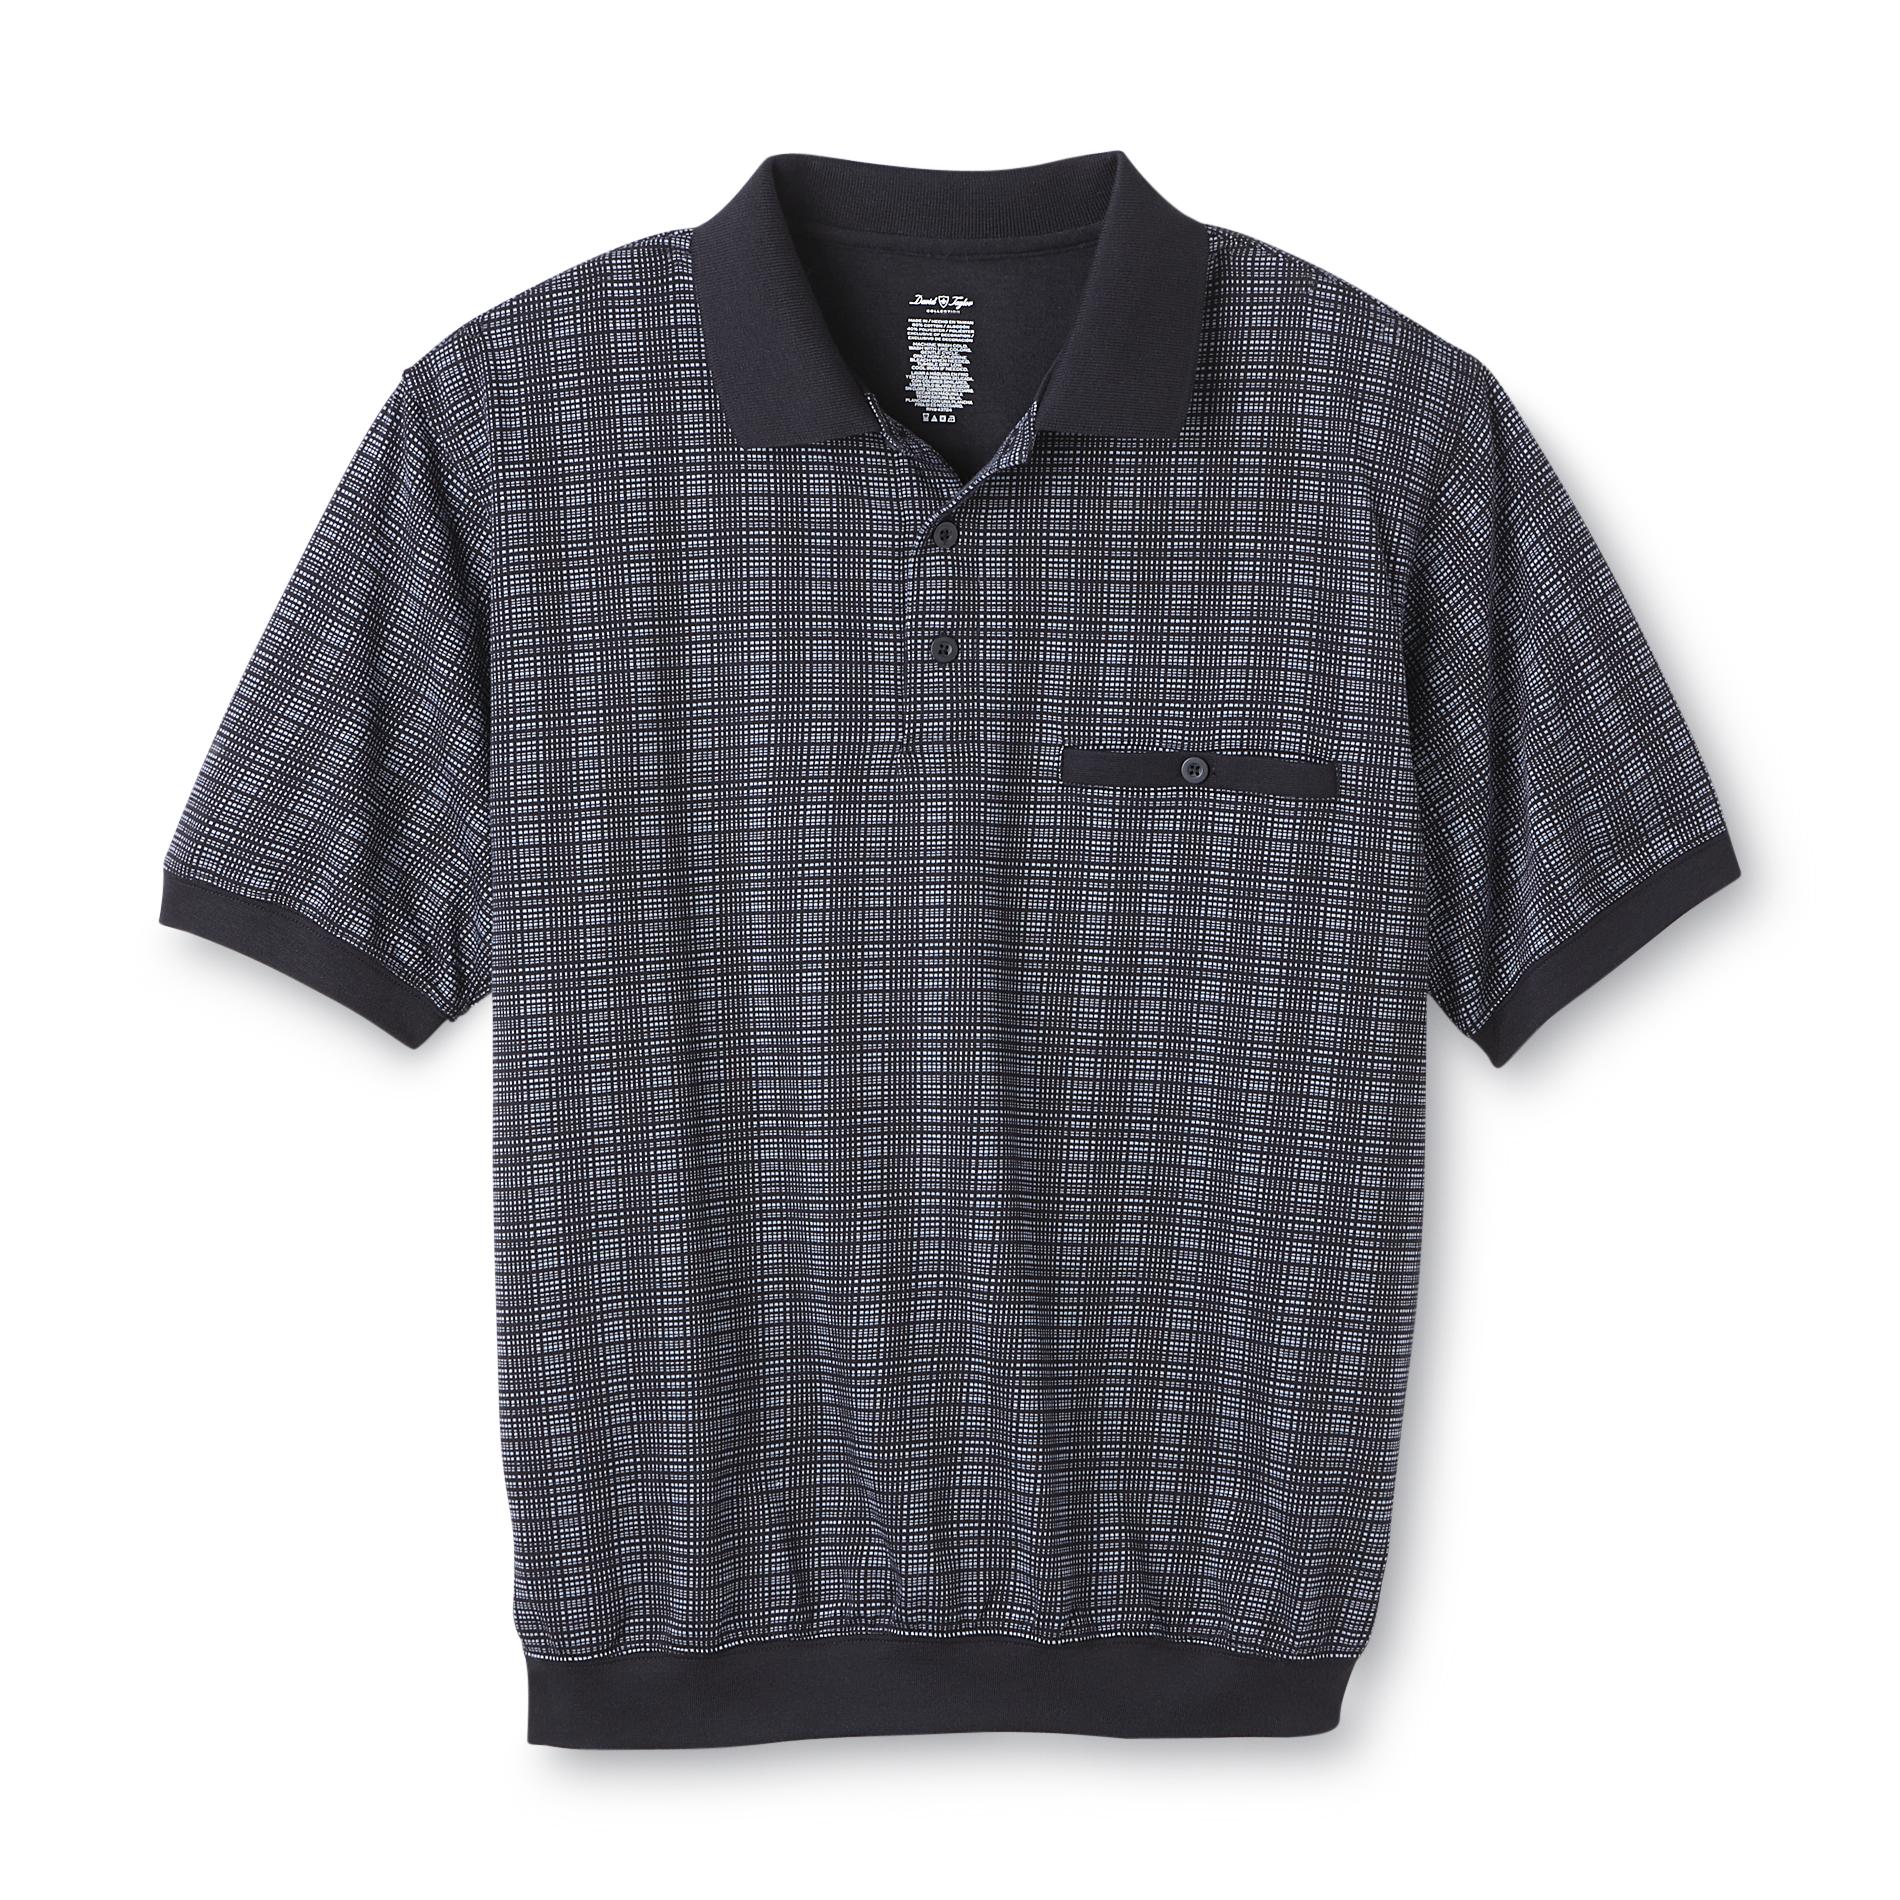 David Taylor Collection Men's Big & Tall Polo Shirt - Grid